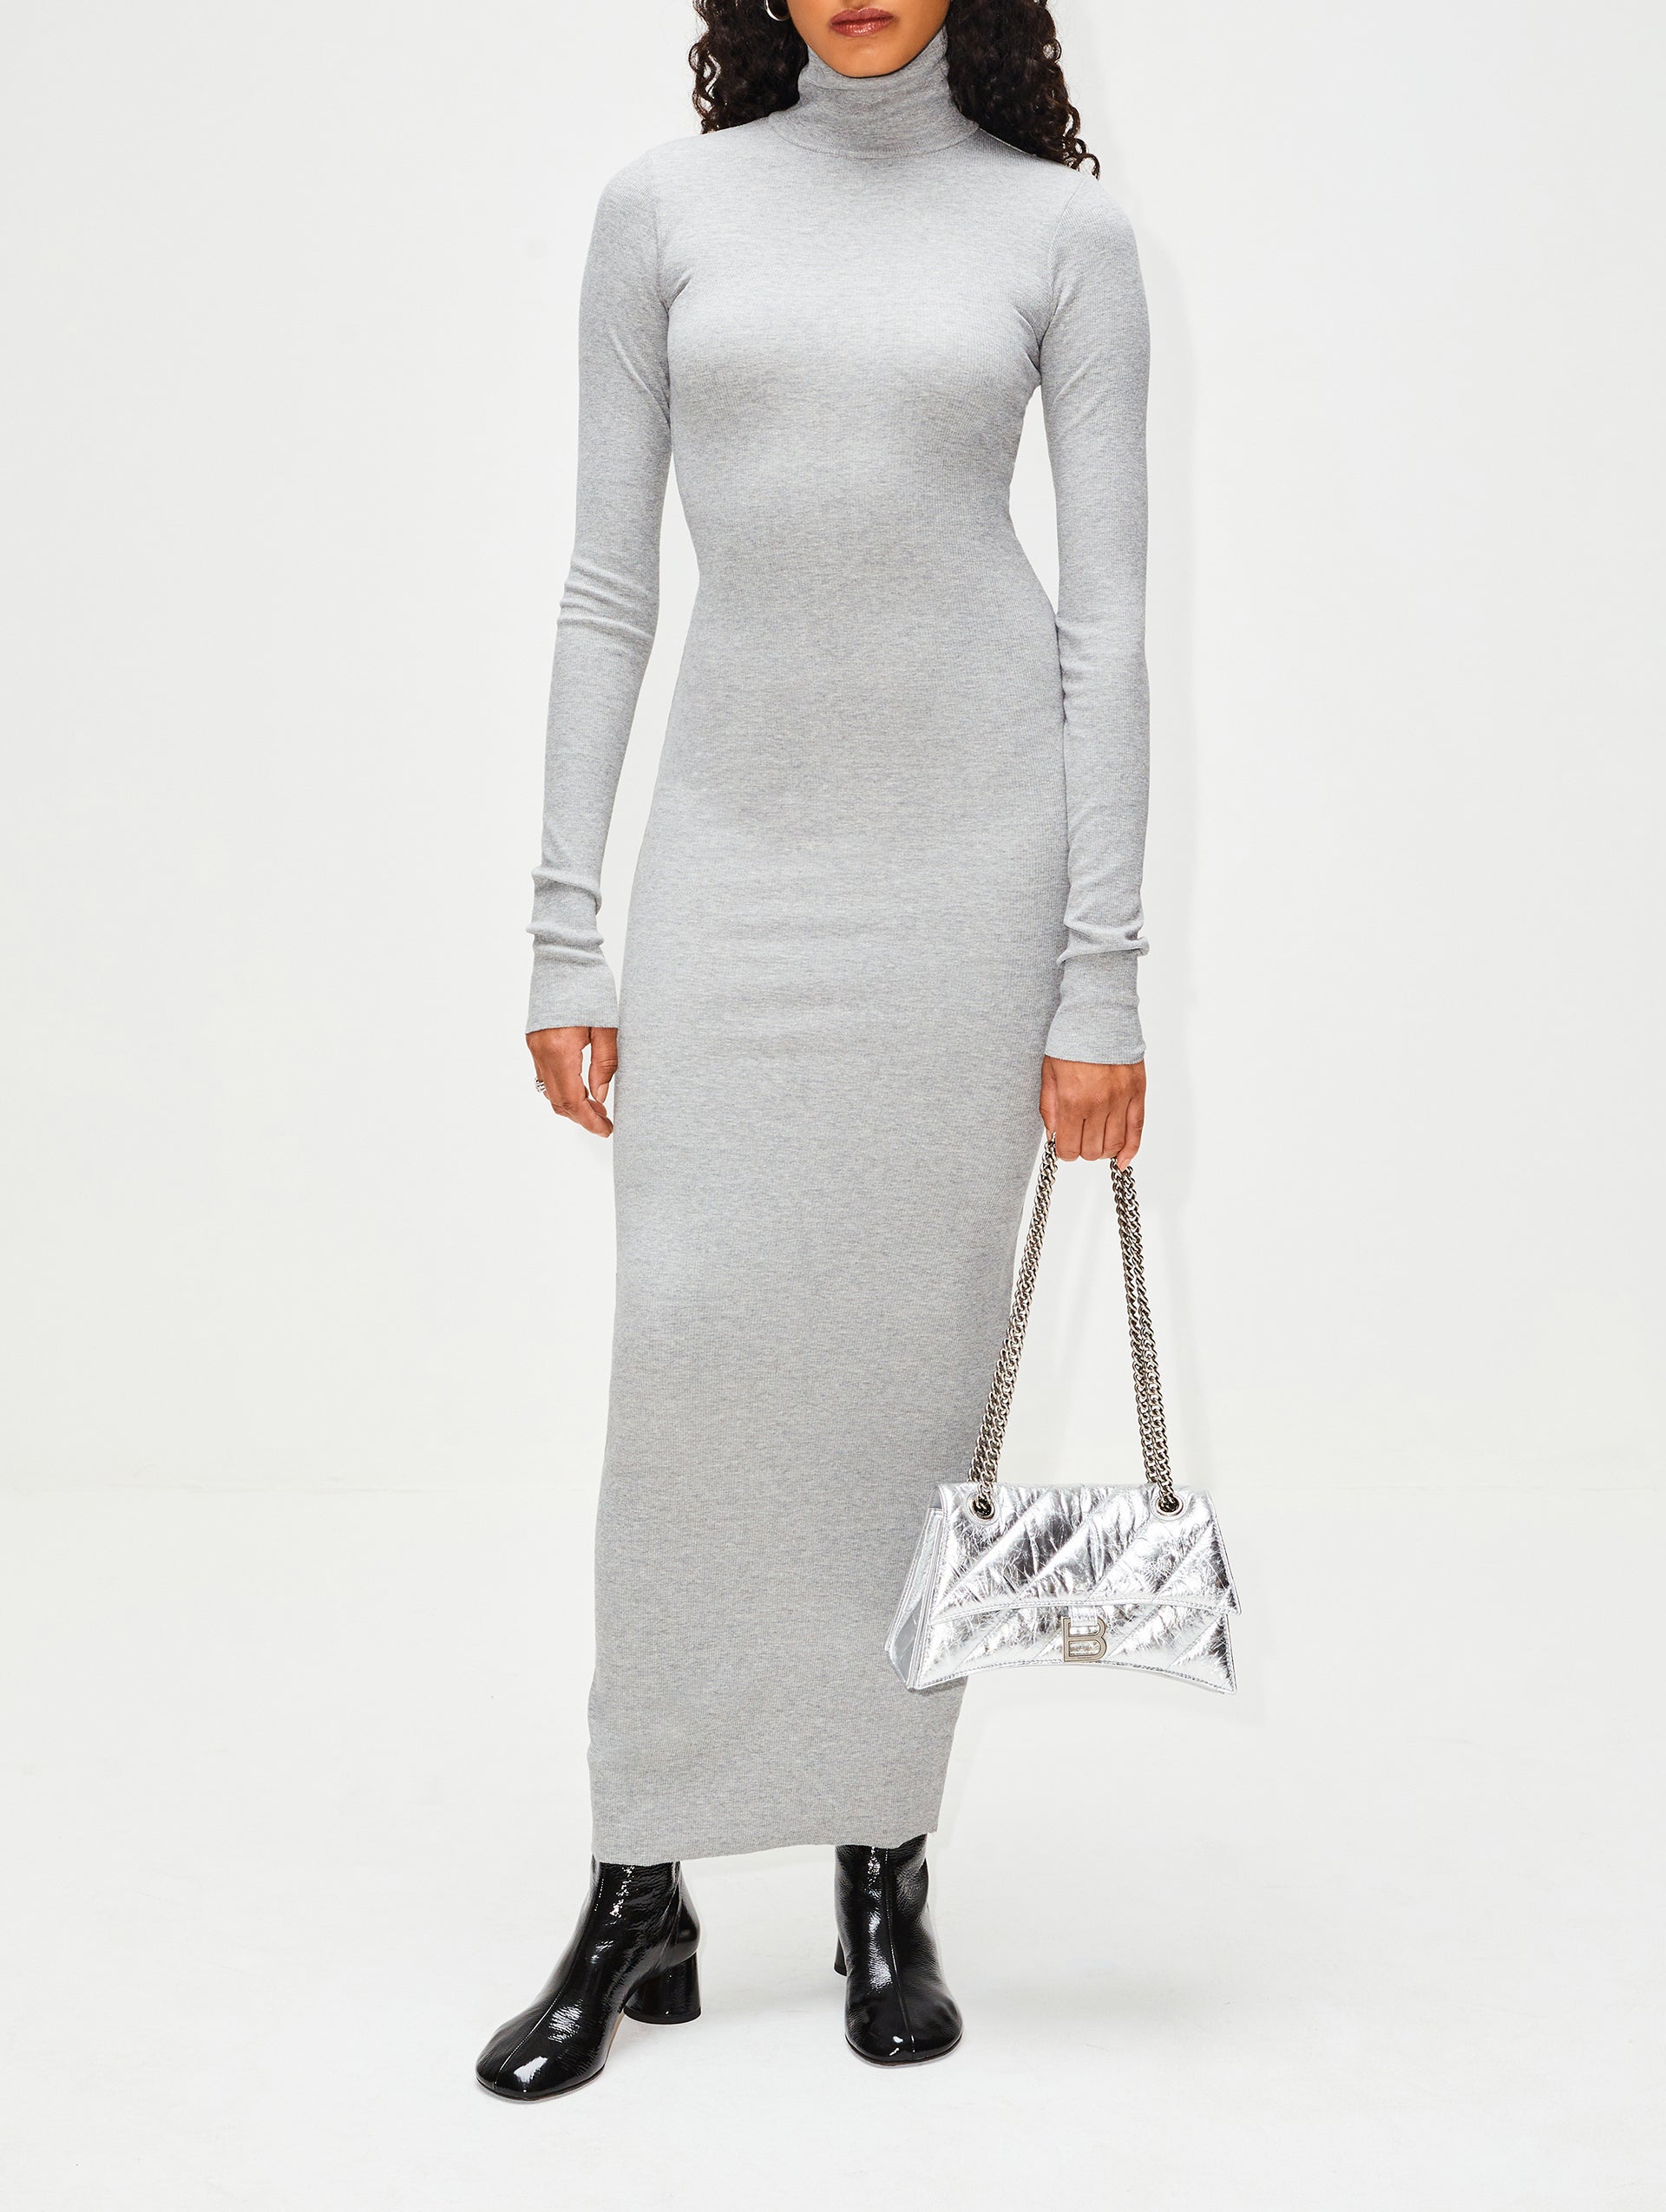 Eterne Long Sleeve Turtleneck Maxi Dress, Butter Soft Ribbed Cotton, Form Fitting, Grey, L